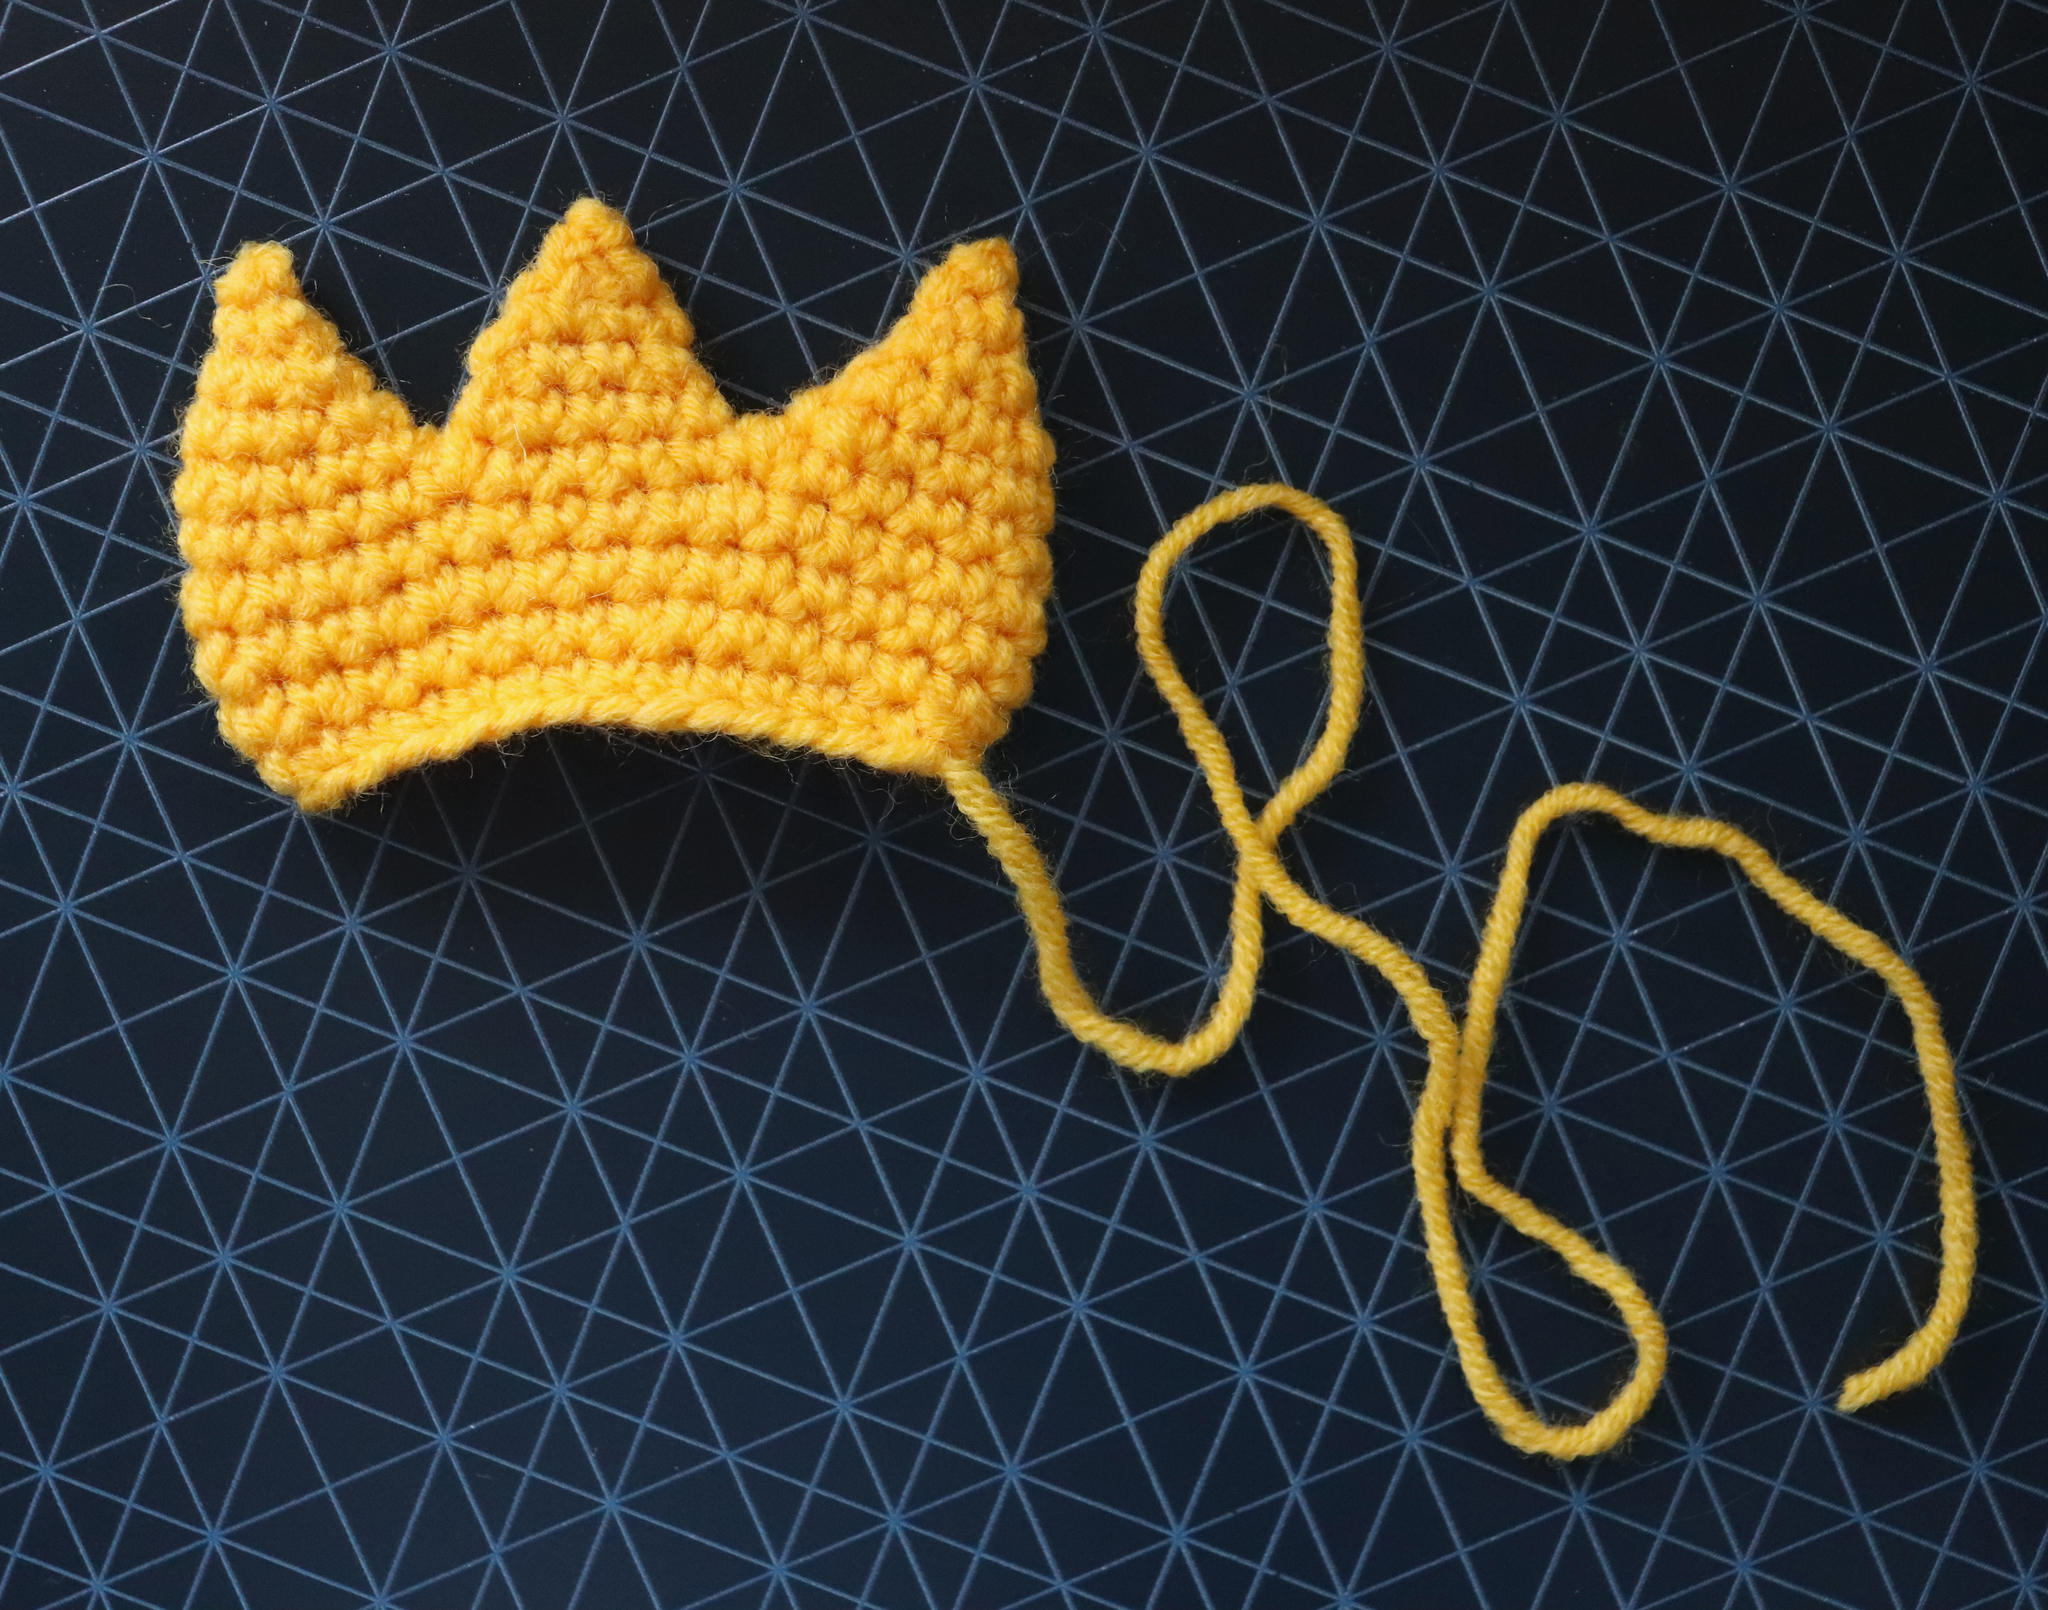 Hat-fish. - My, Cap, Magicarp, A fish, Needlework with process, Longpost, Knitting